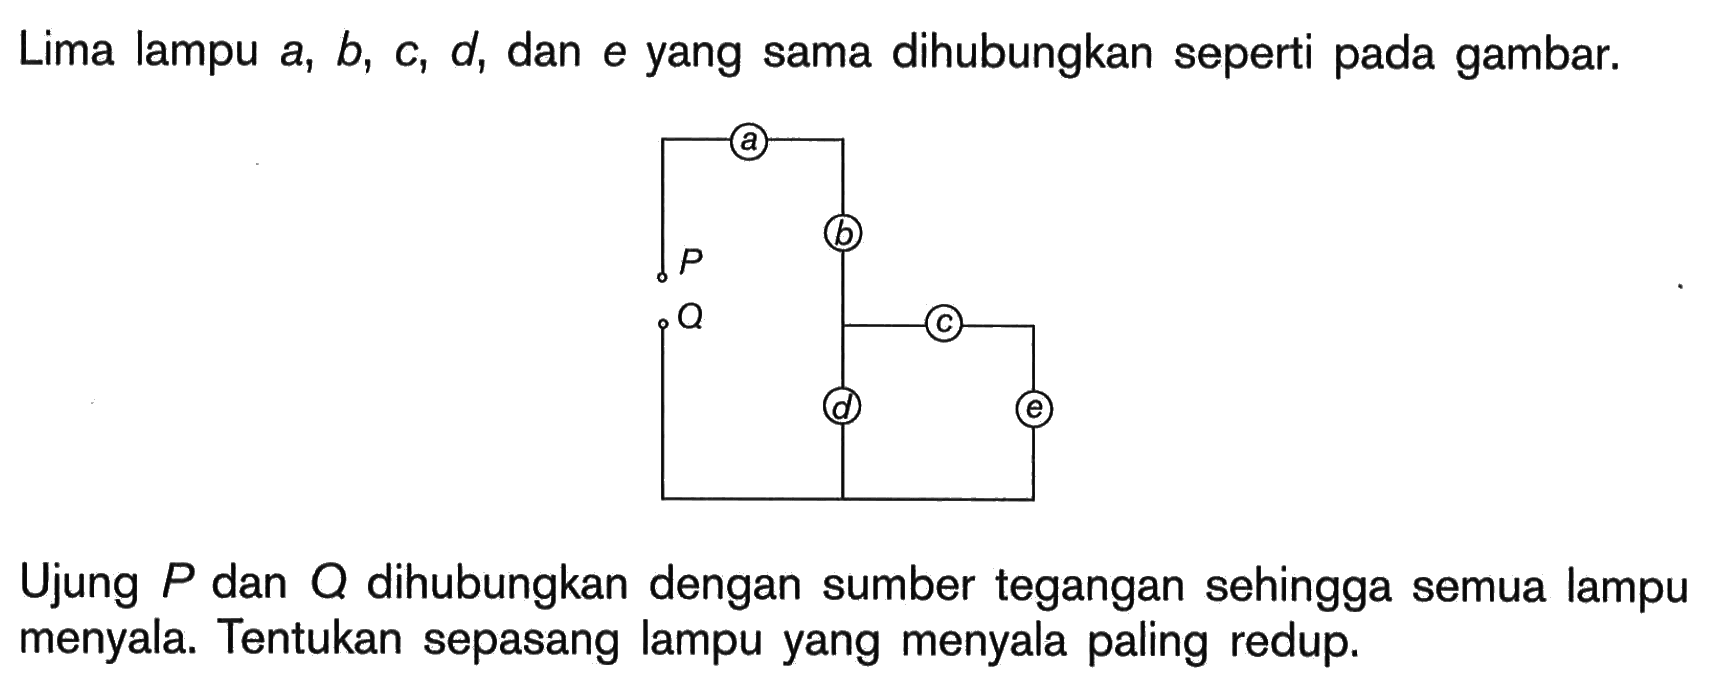 Lima lampu  a, b, c, d , dan e yang sama dihubungkan seperti pada gambar.Ujung  P  dan  Q  dihubungkan dengan sumber tegangan sehingga semua lampu menyala. Tentukan sepasang lampu yang menyala paling redup.